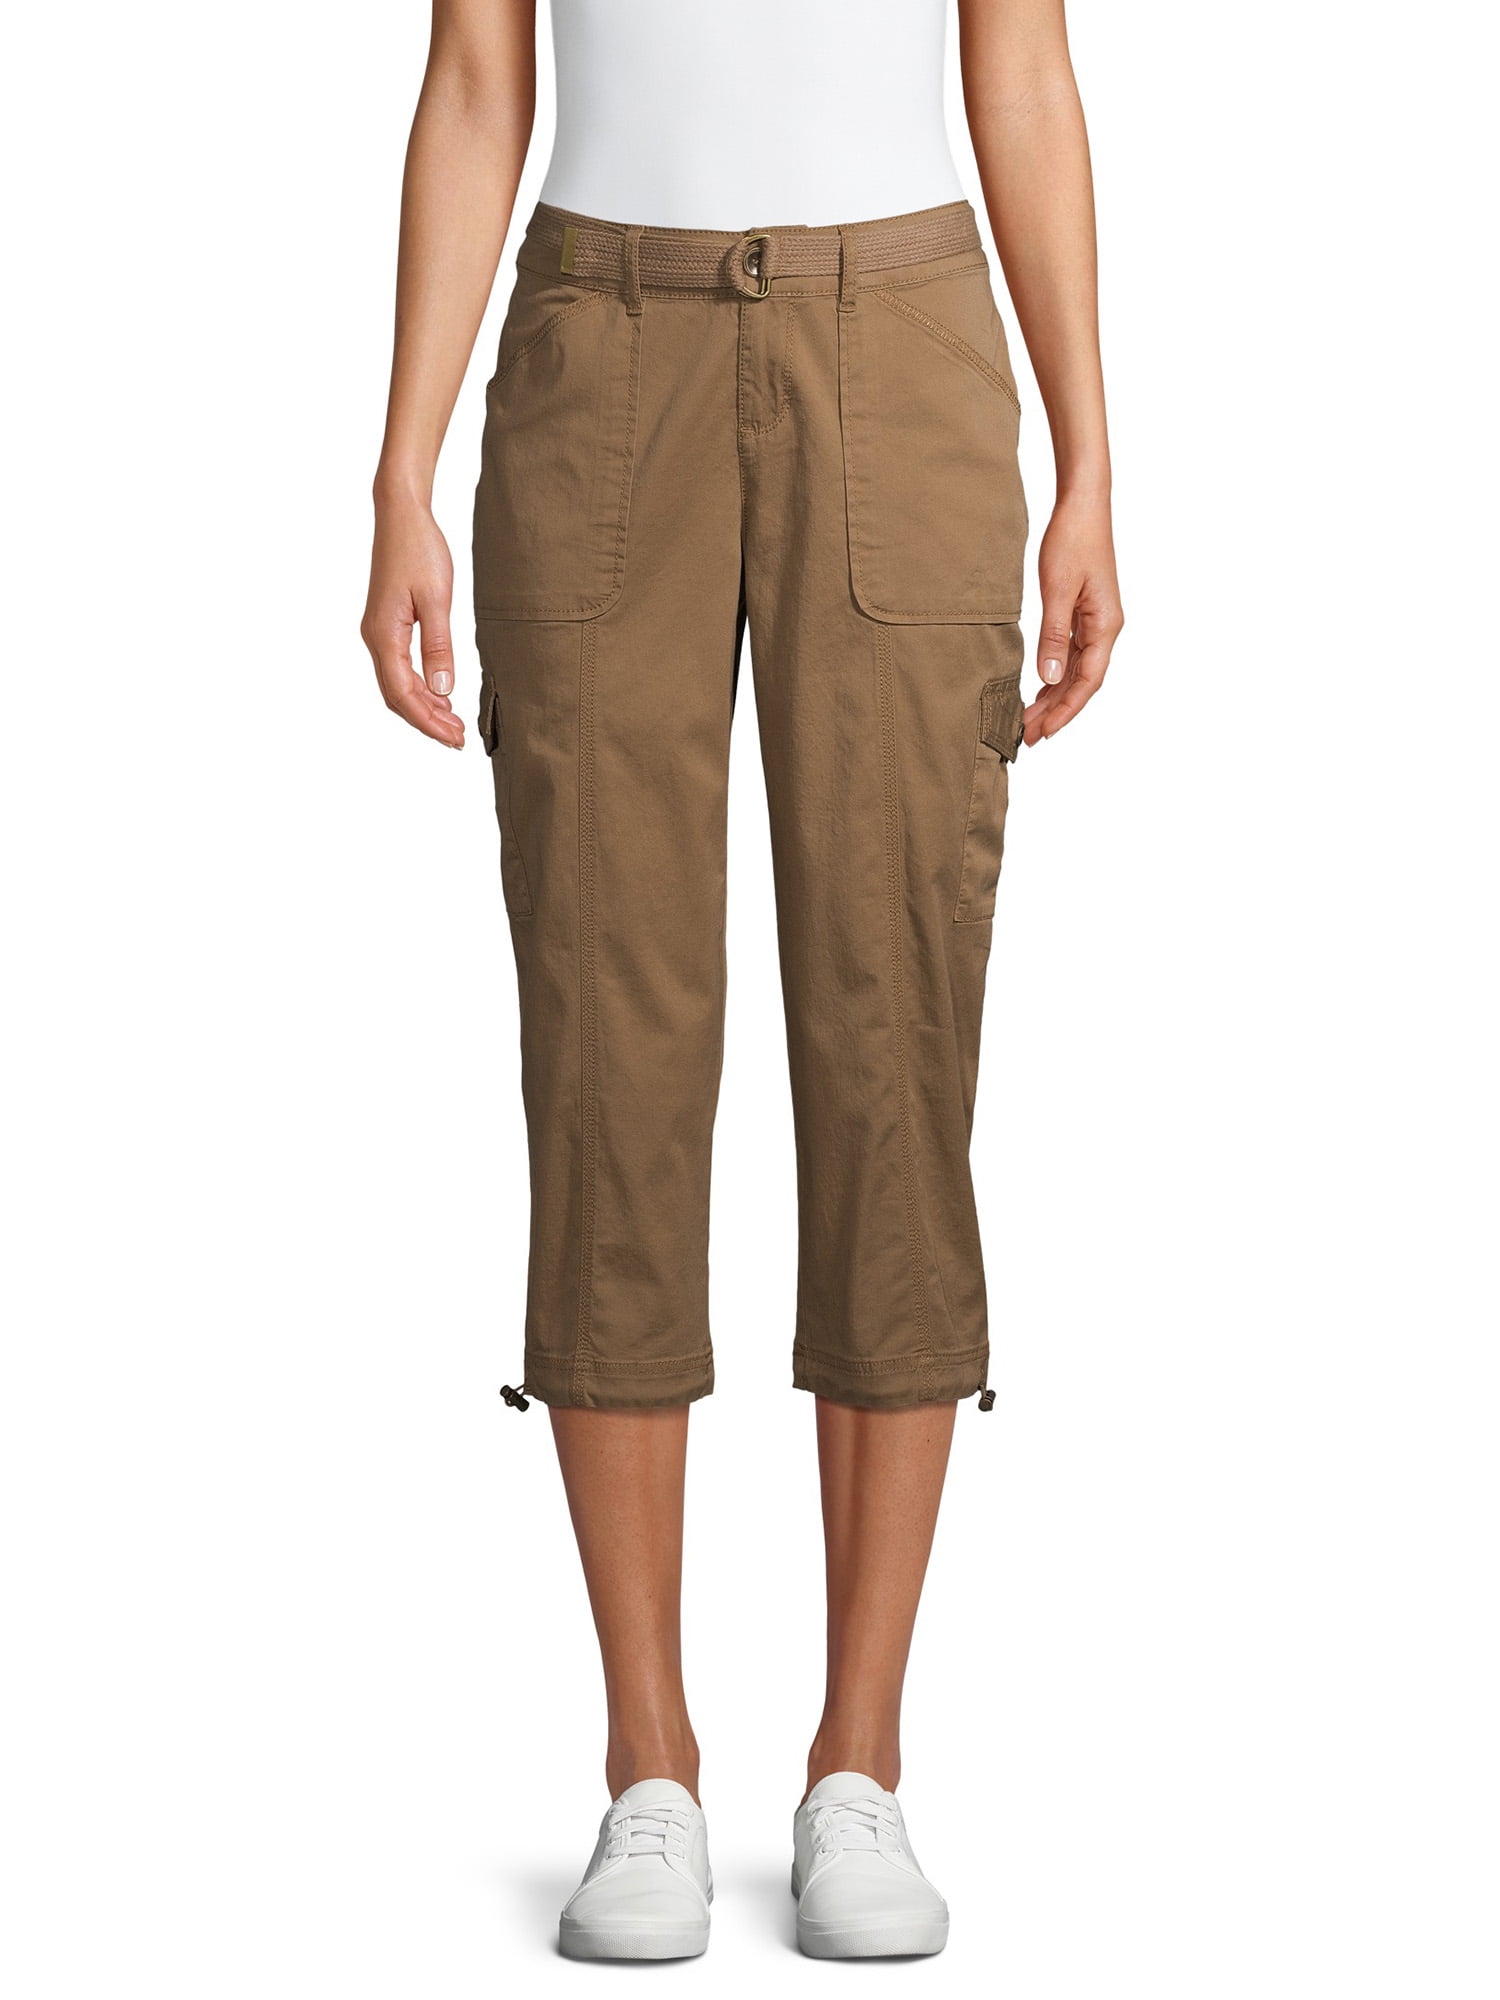 Style & Co Cargo Skimmer Pants for Women